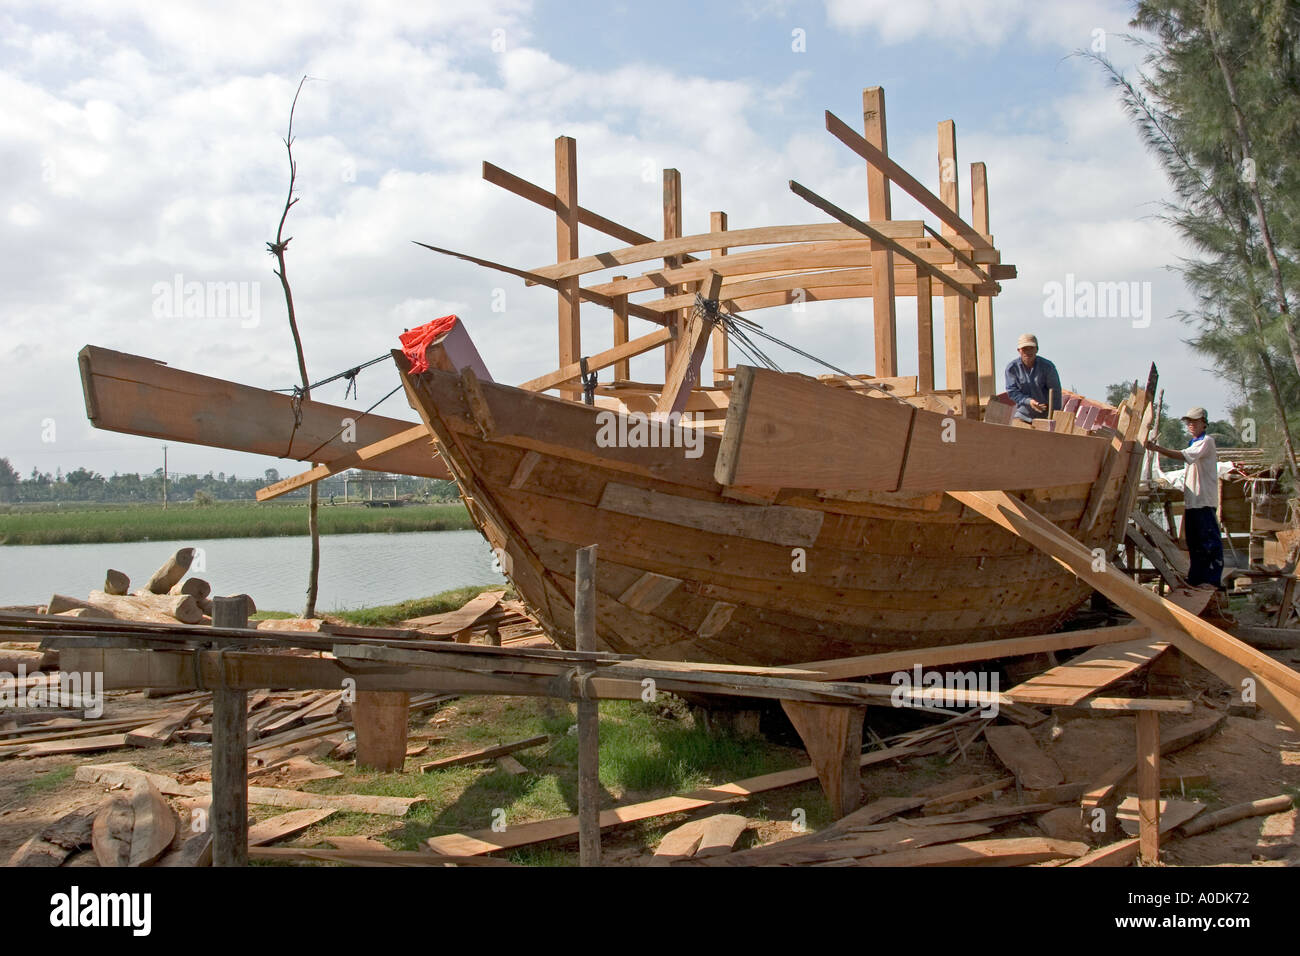 vietnam central hoi an cam kim island building wooden boat